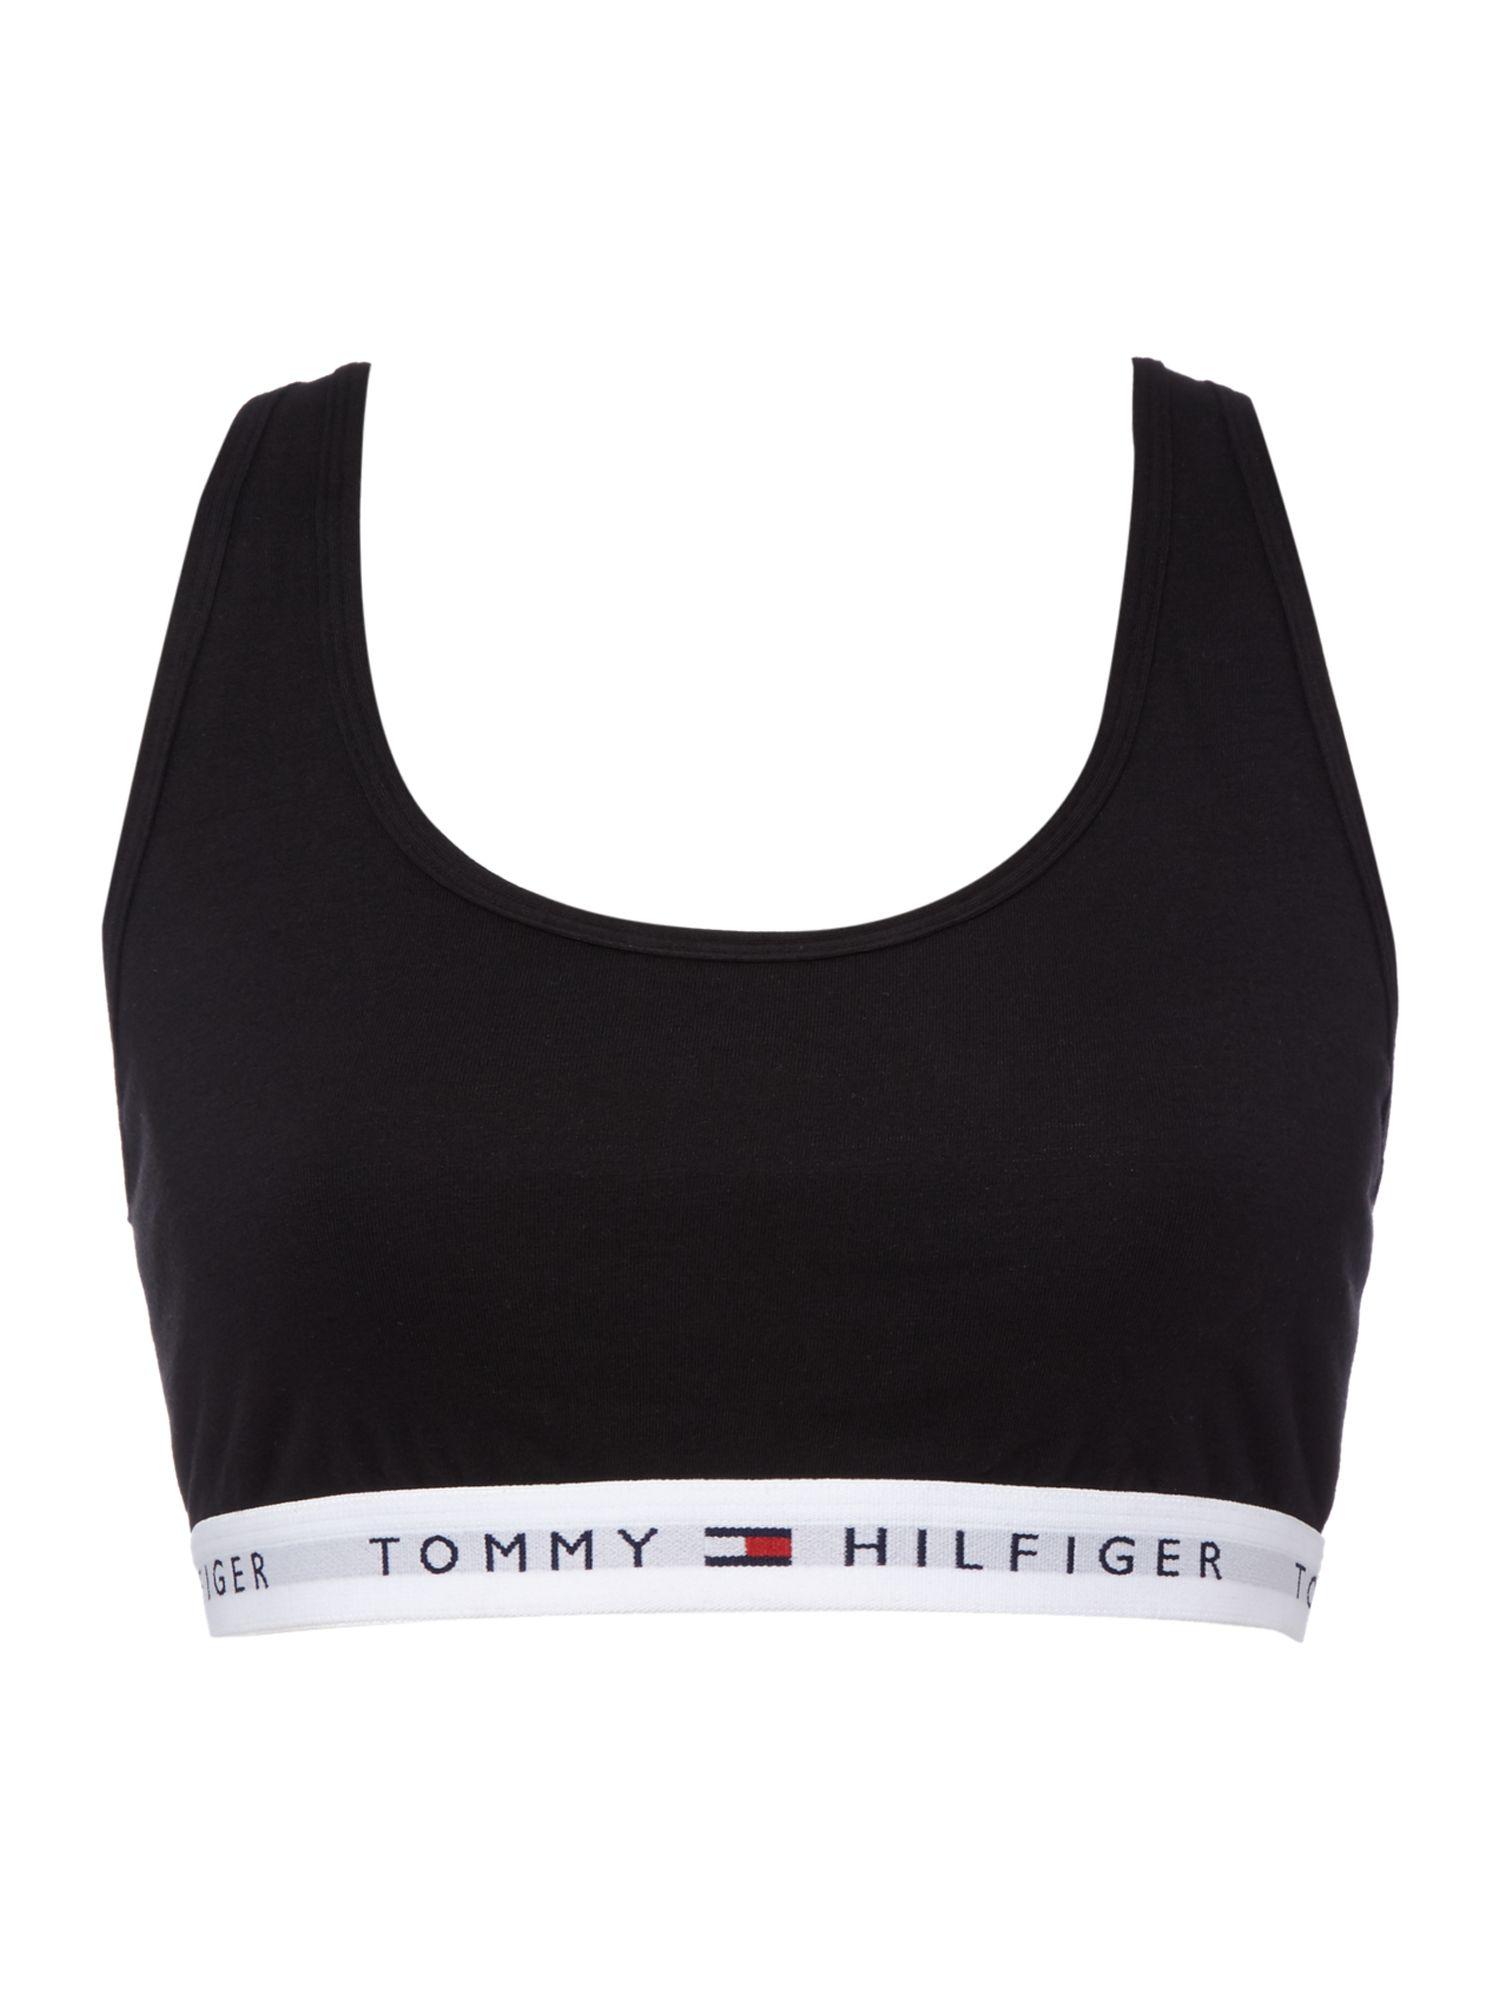 Lyst - Tommy hilfiger Logo Crop Top in Black